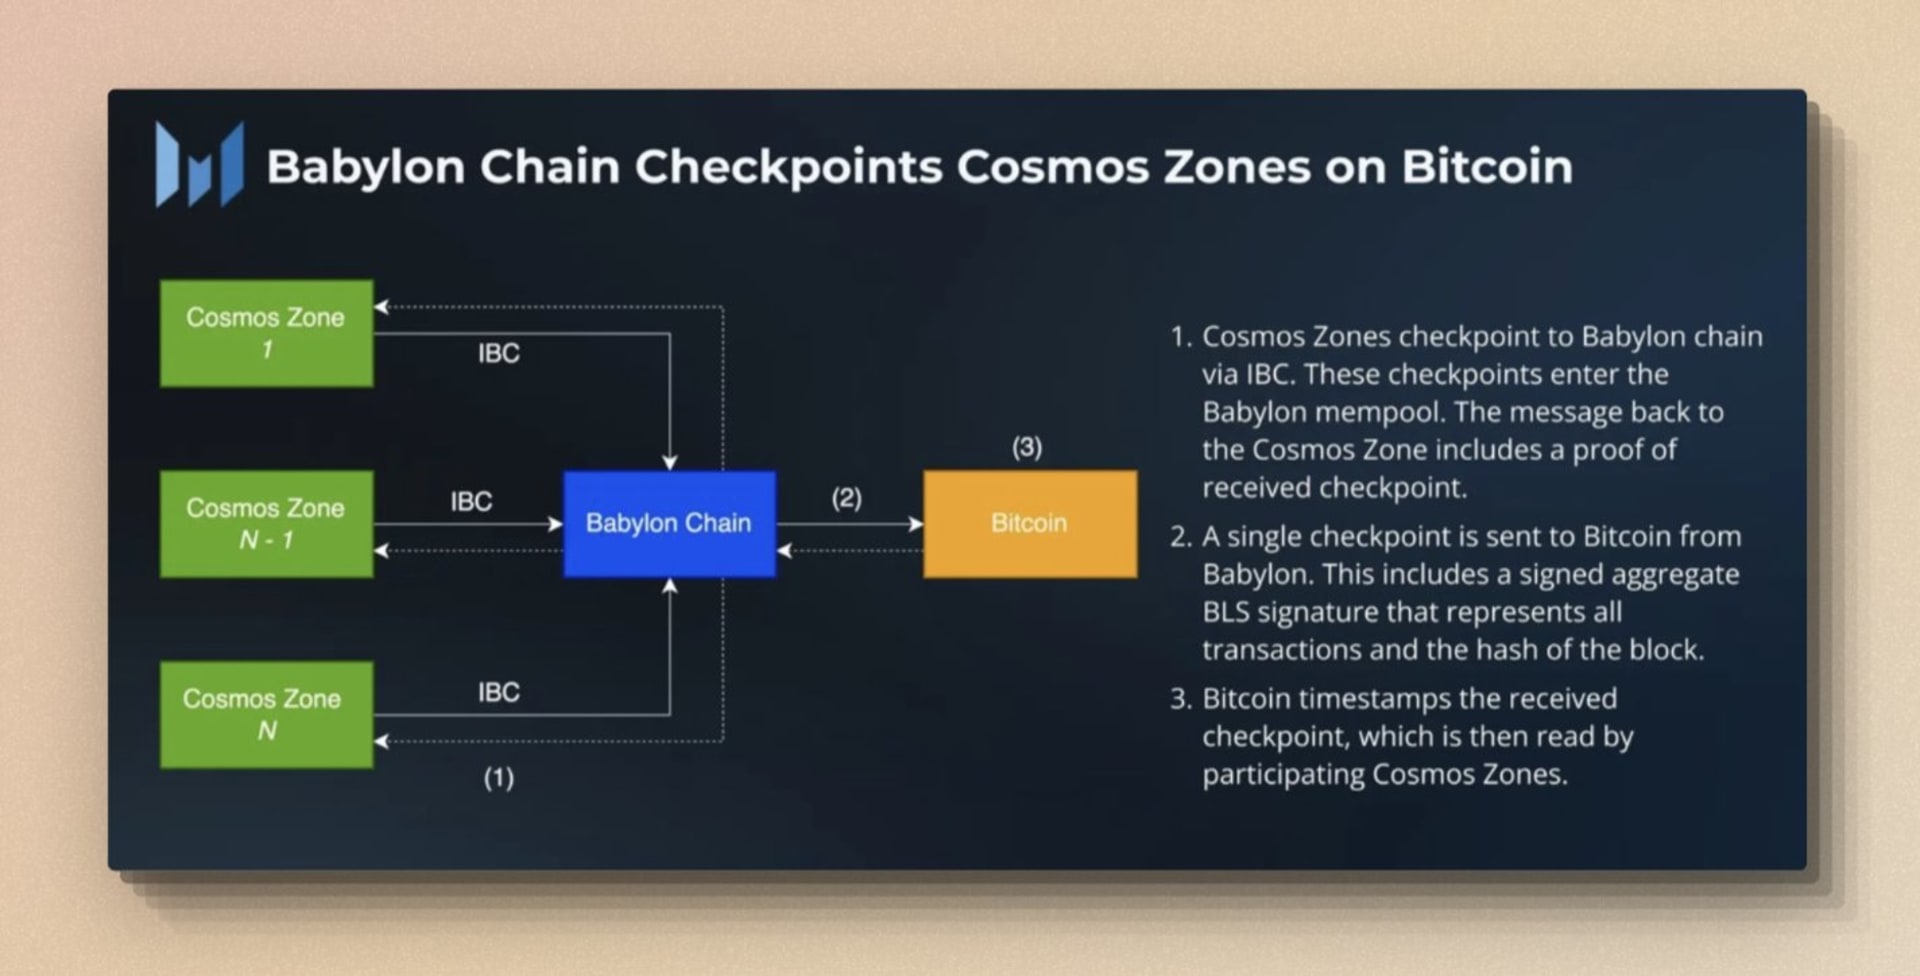 Babylon chain checkpoints cosmos zones on Bitcoin